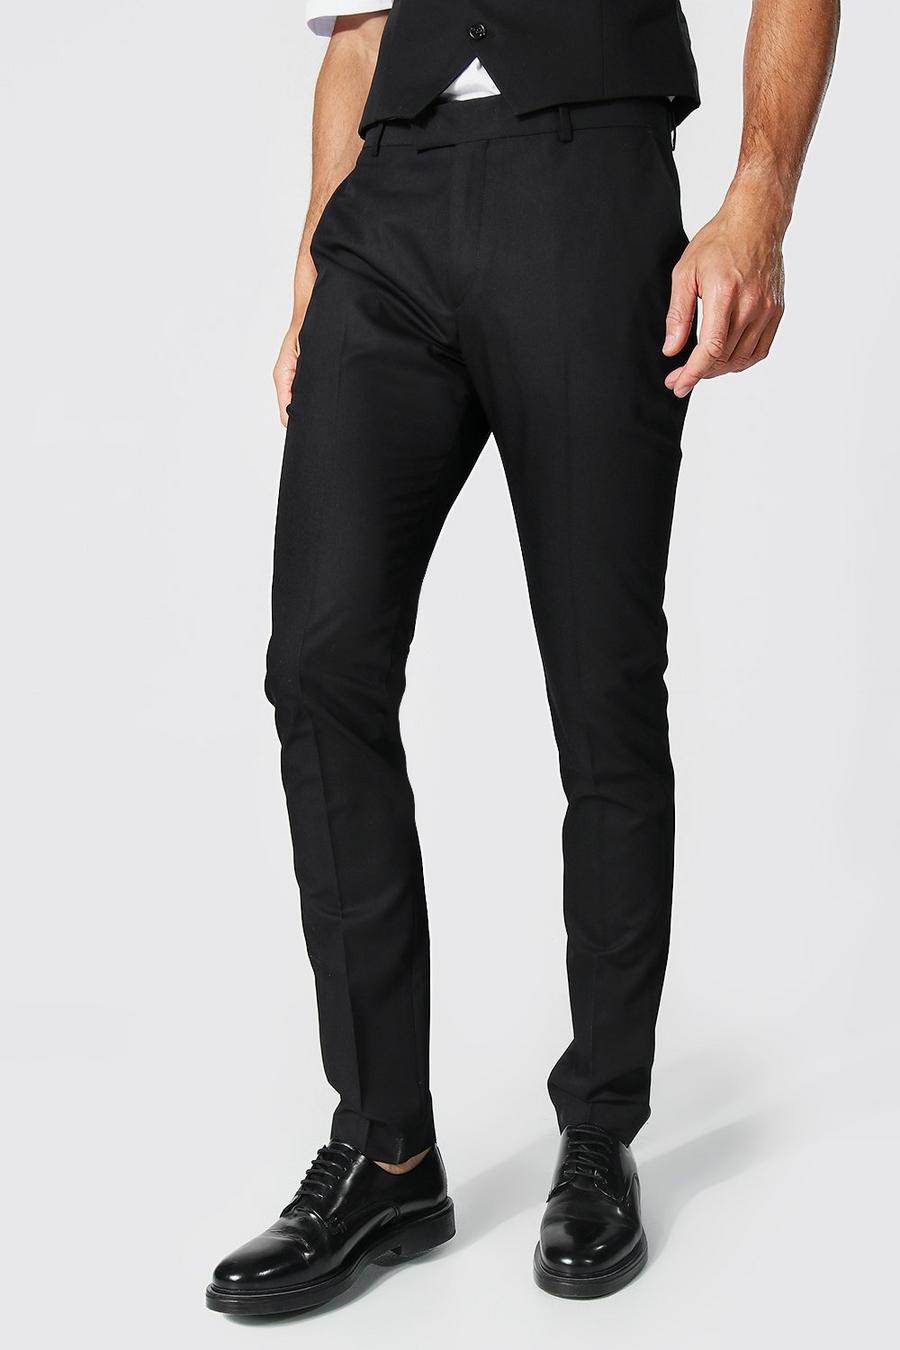 Tall - Pantalon skinny habillé, Black noir